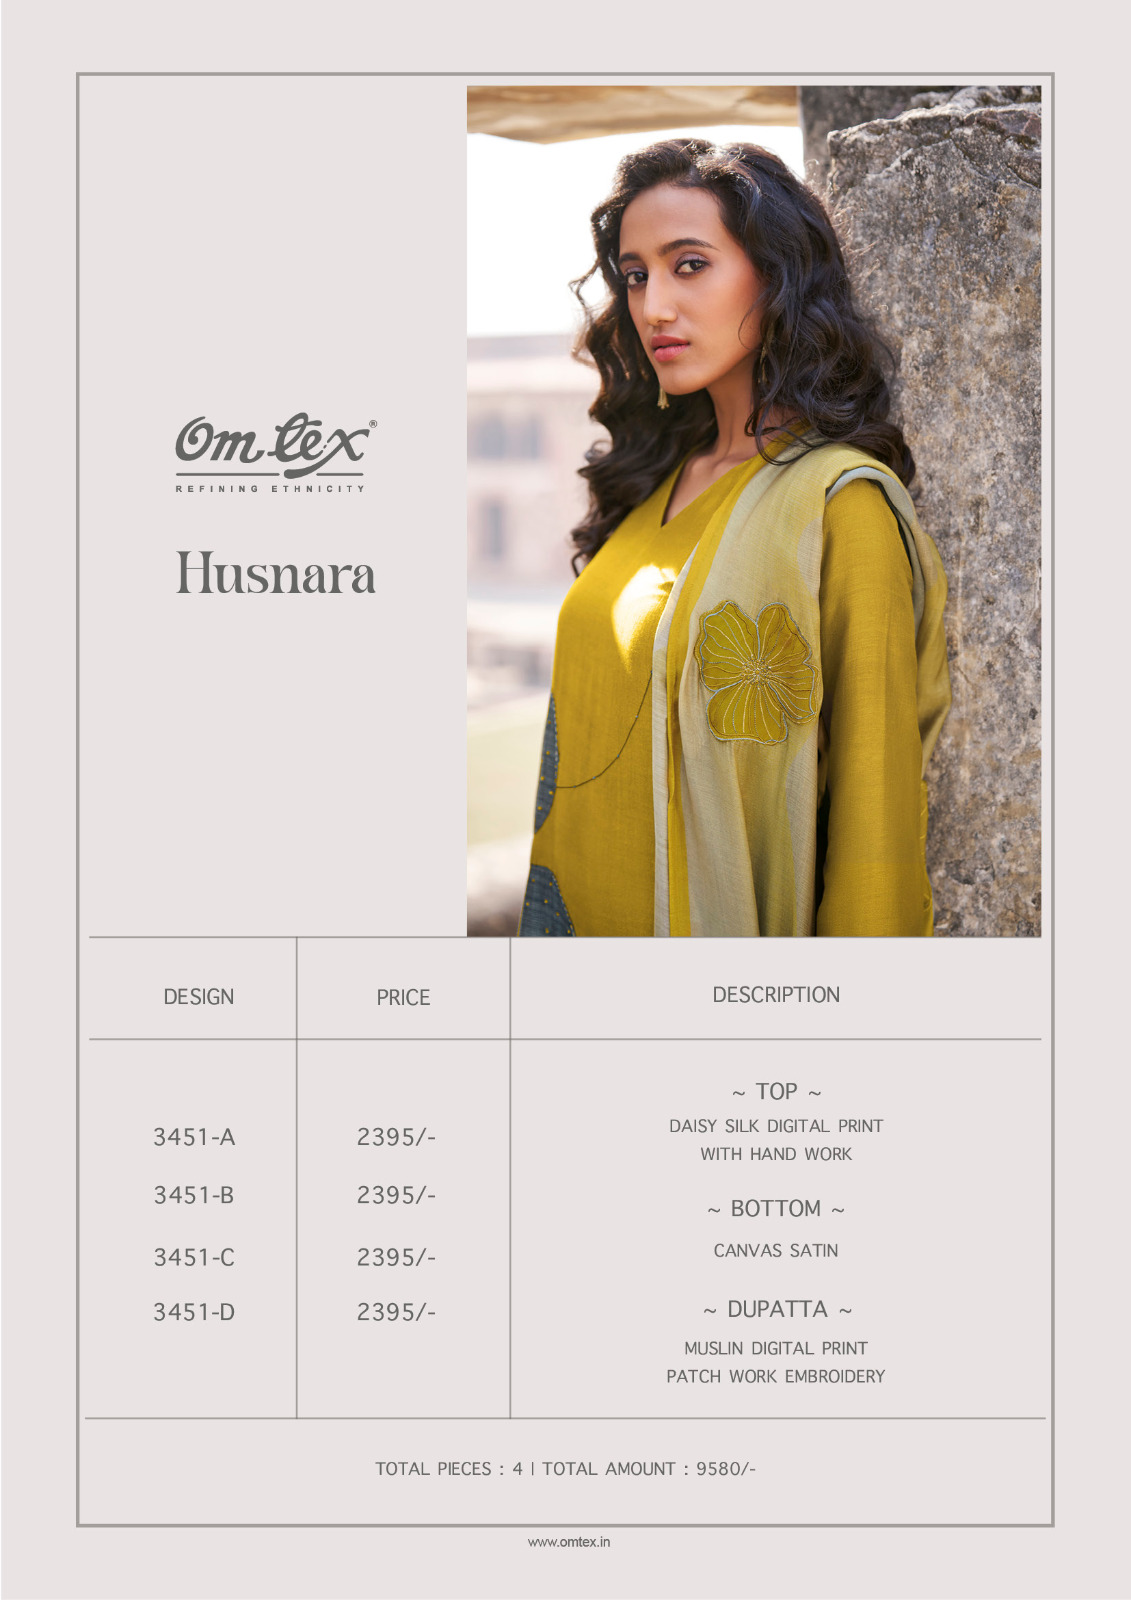 Omtex Husnara collection 7